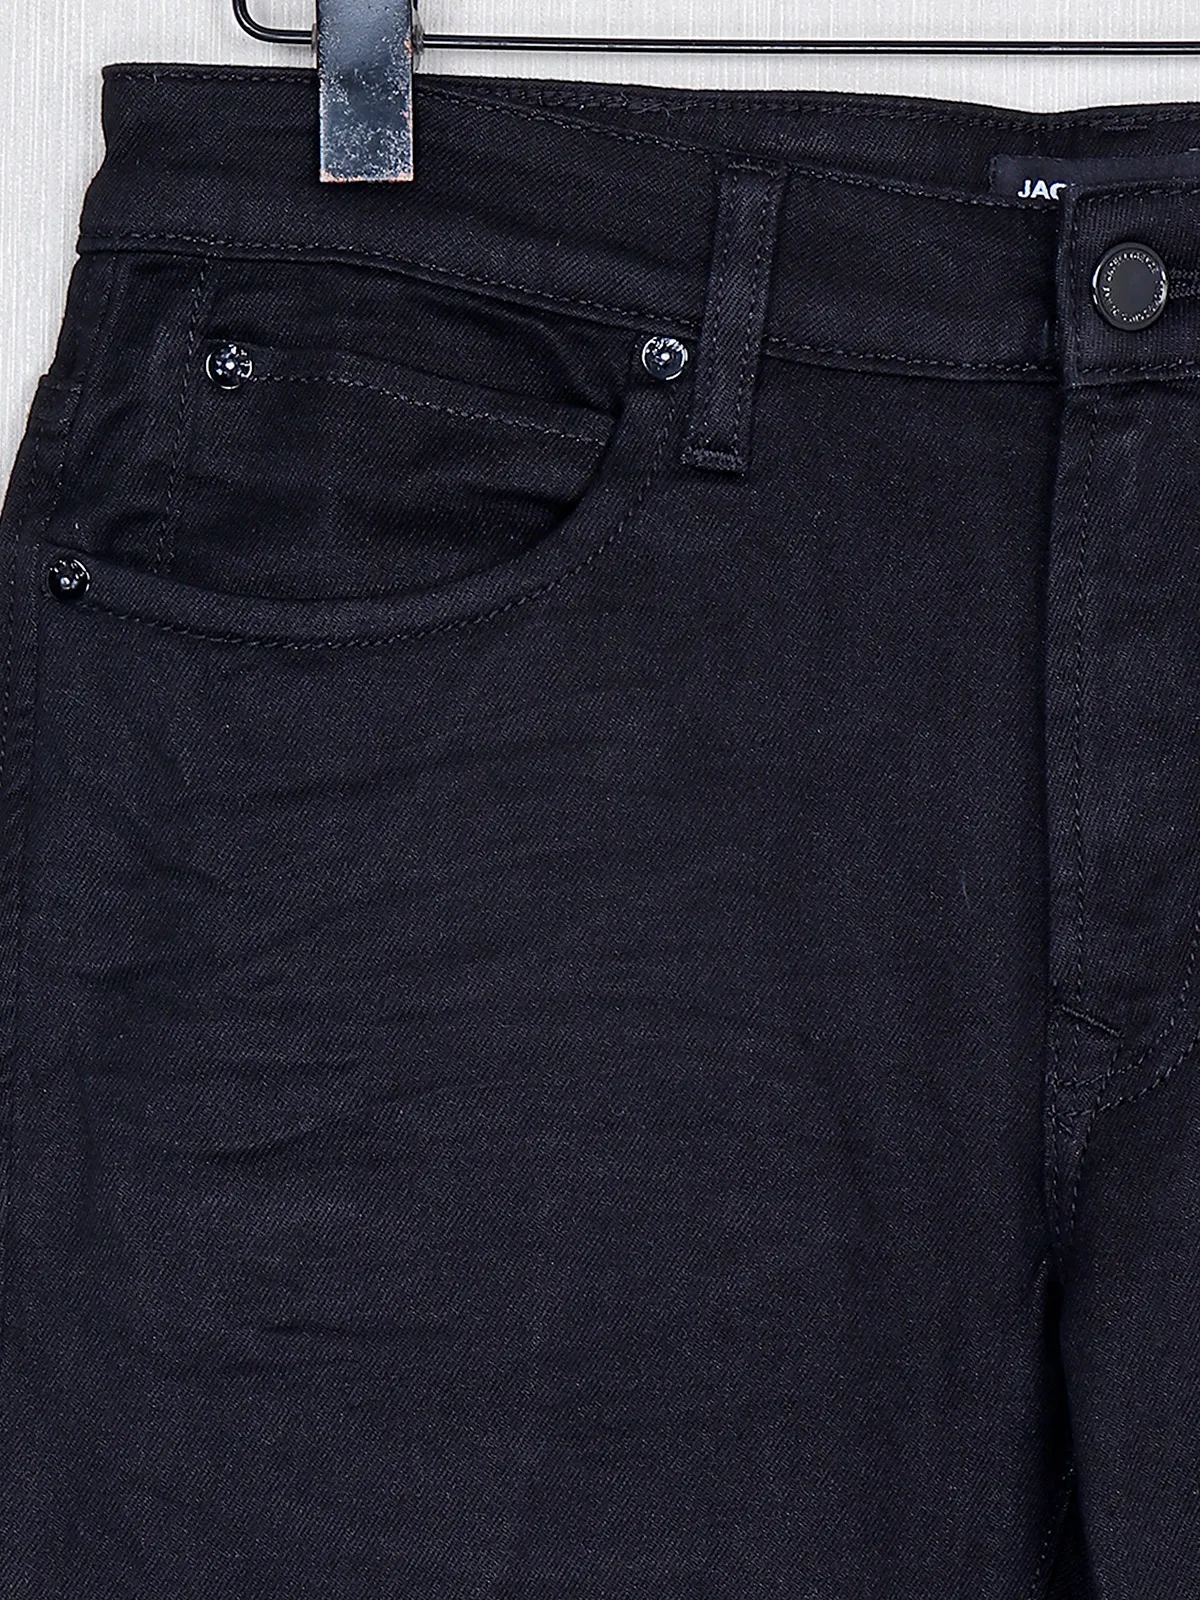 Jack&Jones solid black denim jeans